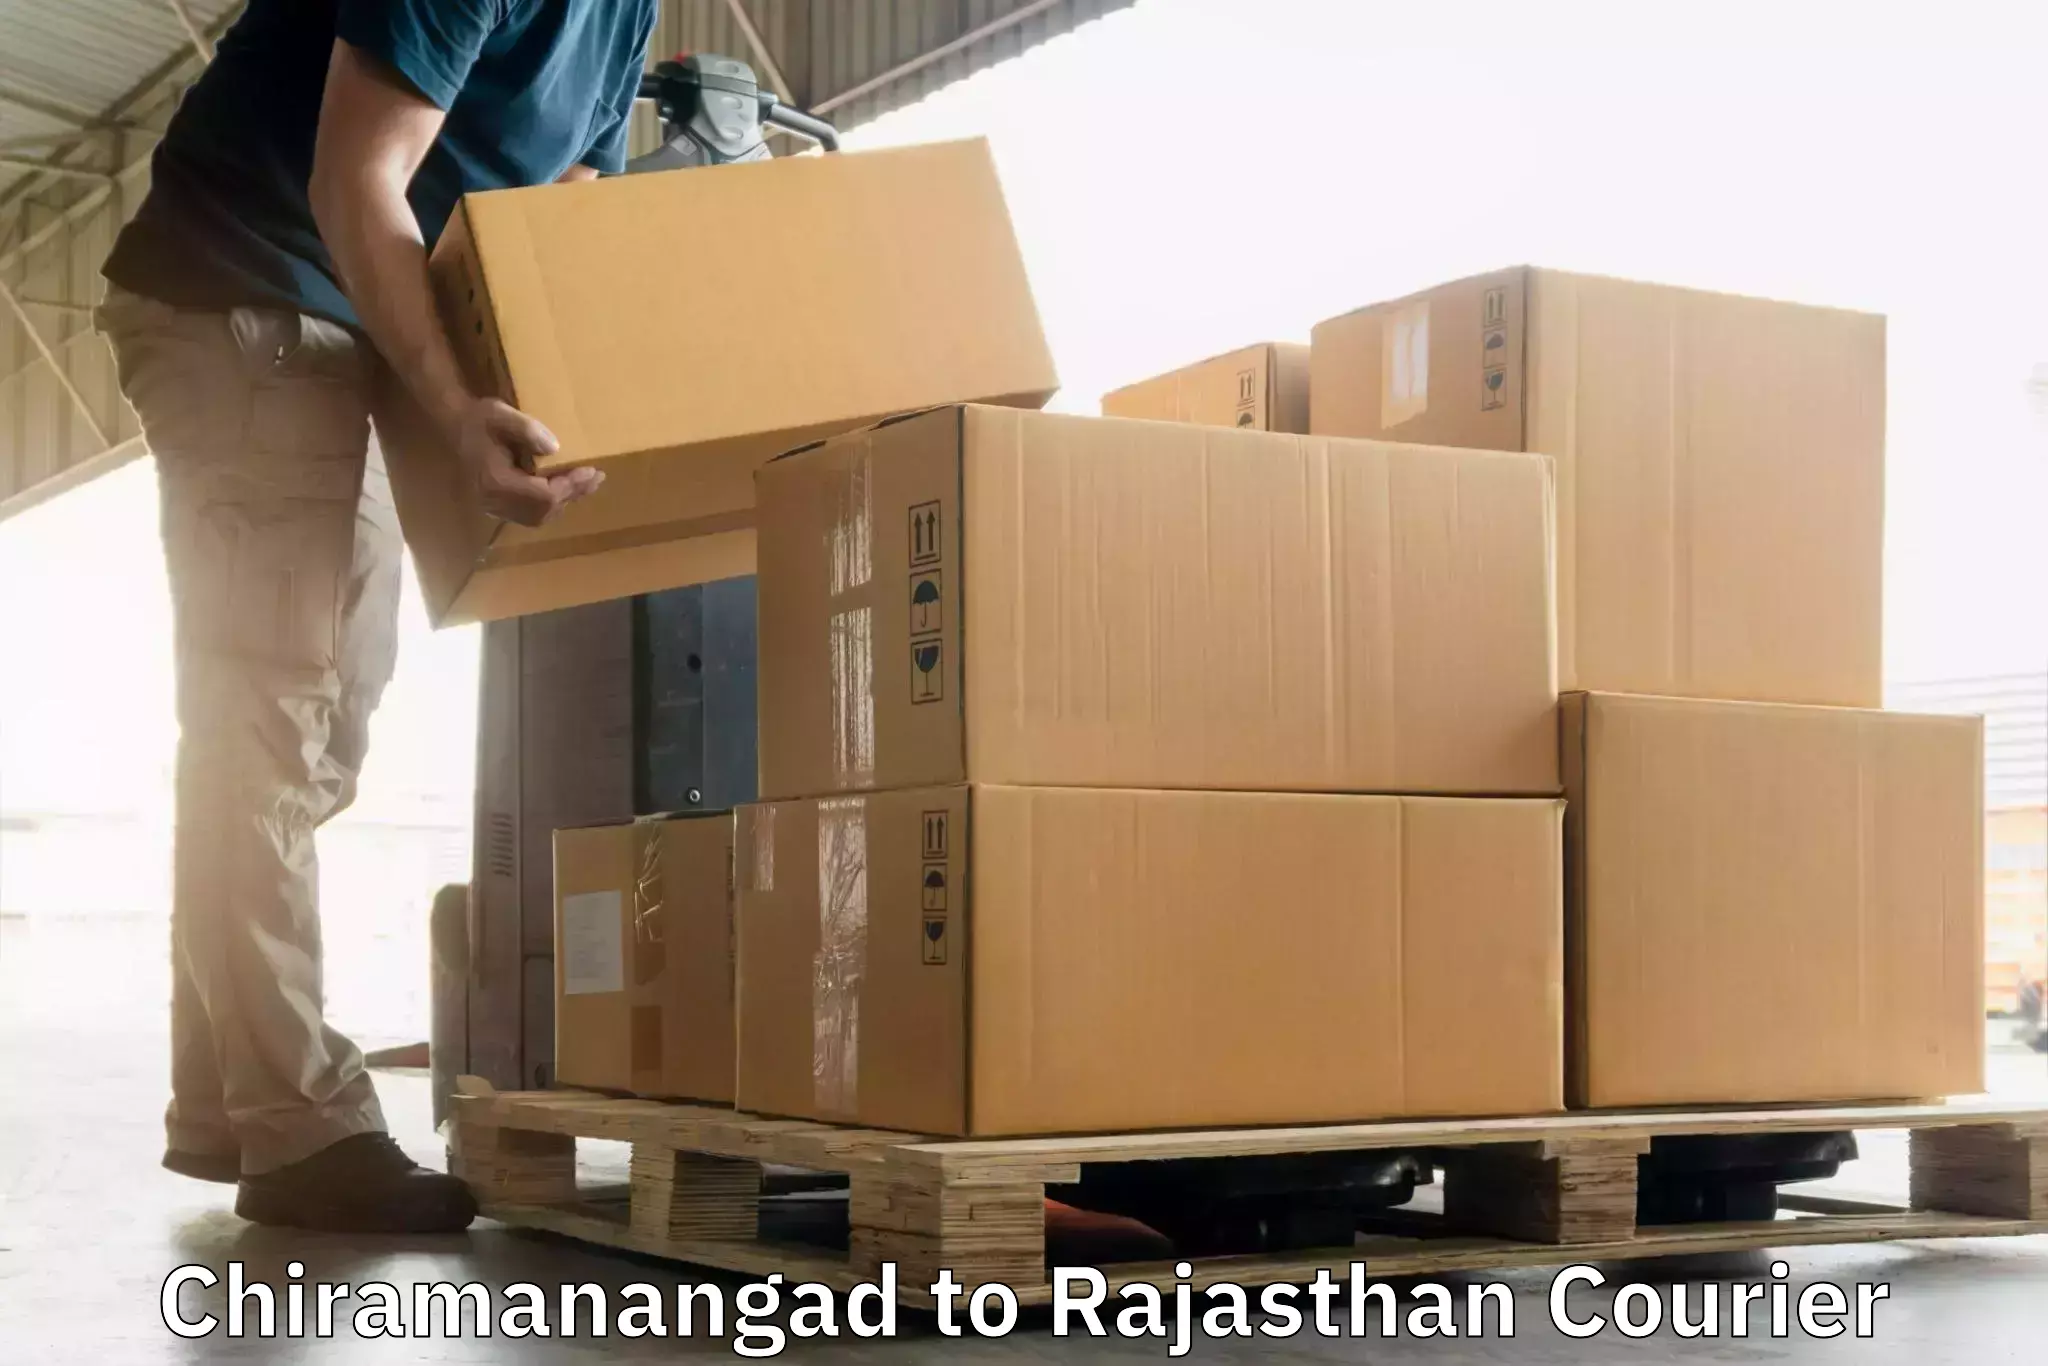 Express postal services Chiramanangad to Rajasthan